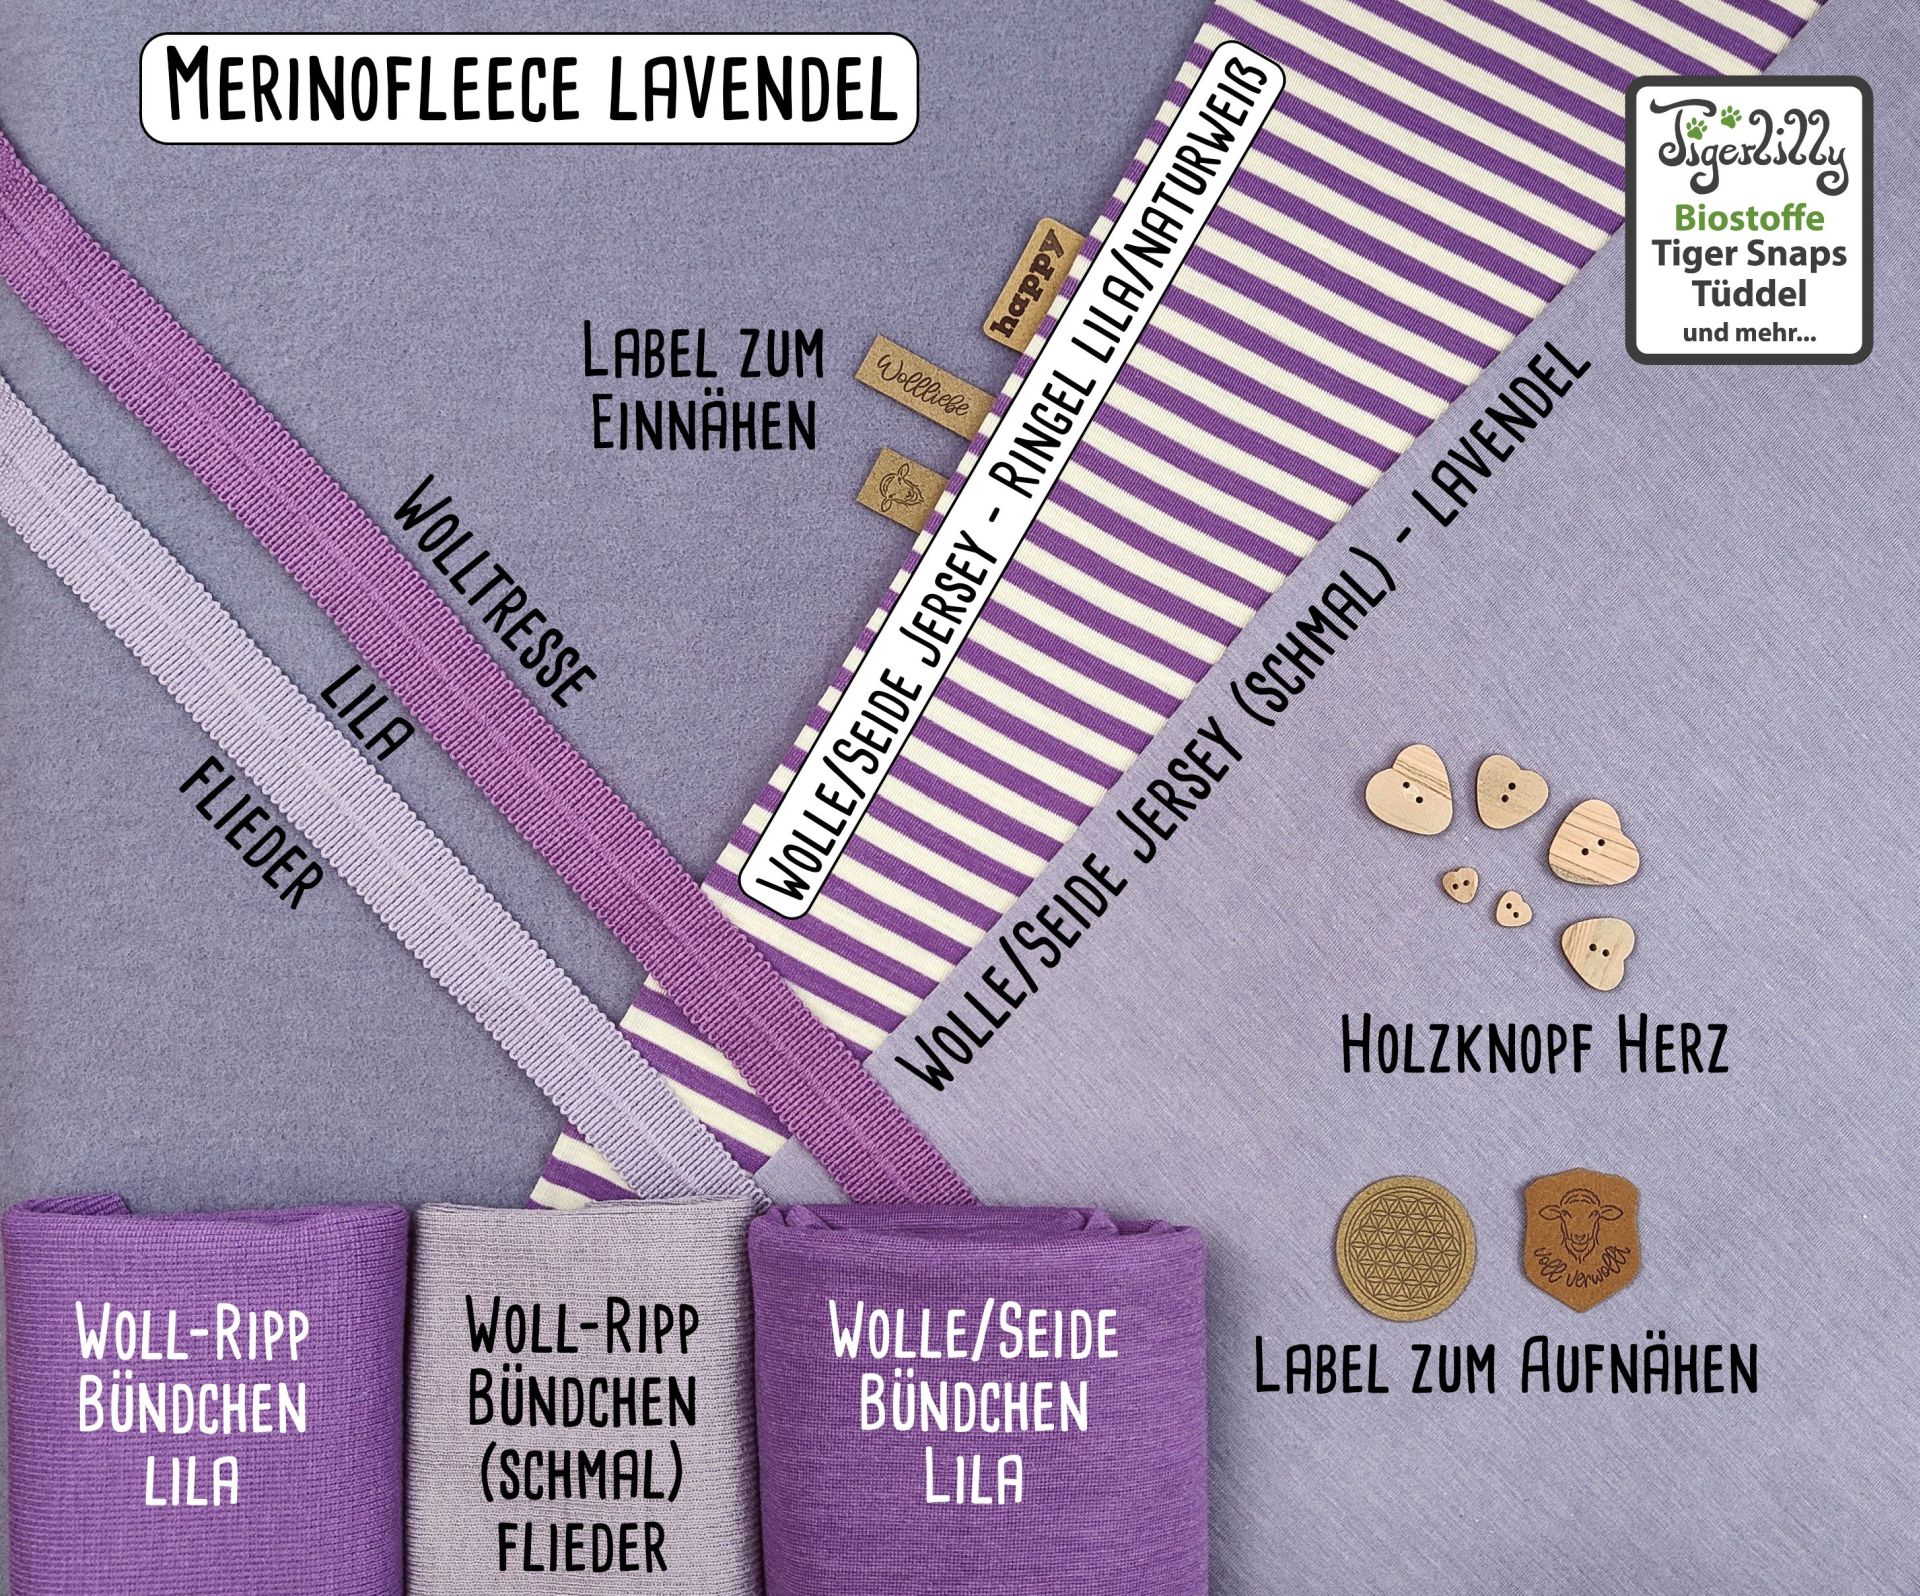 Merinofleece Lavendel